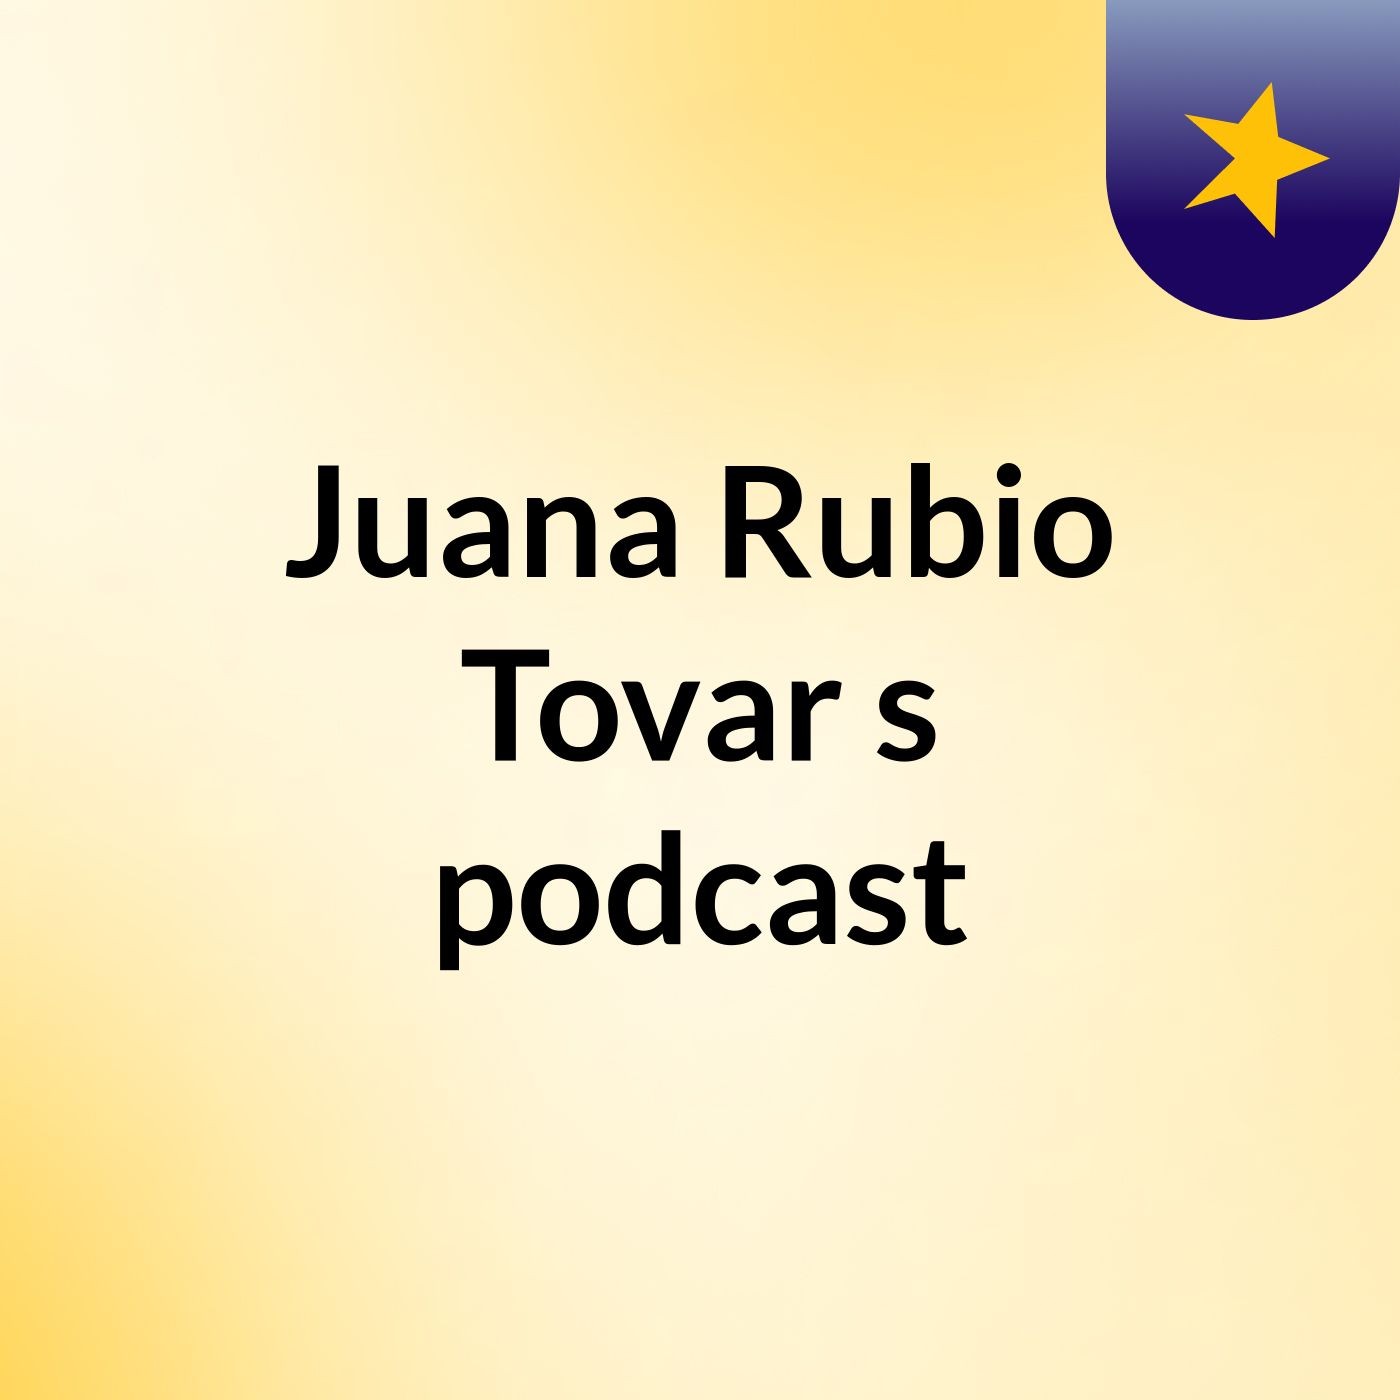 Juana Rubio Tovar's podcast